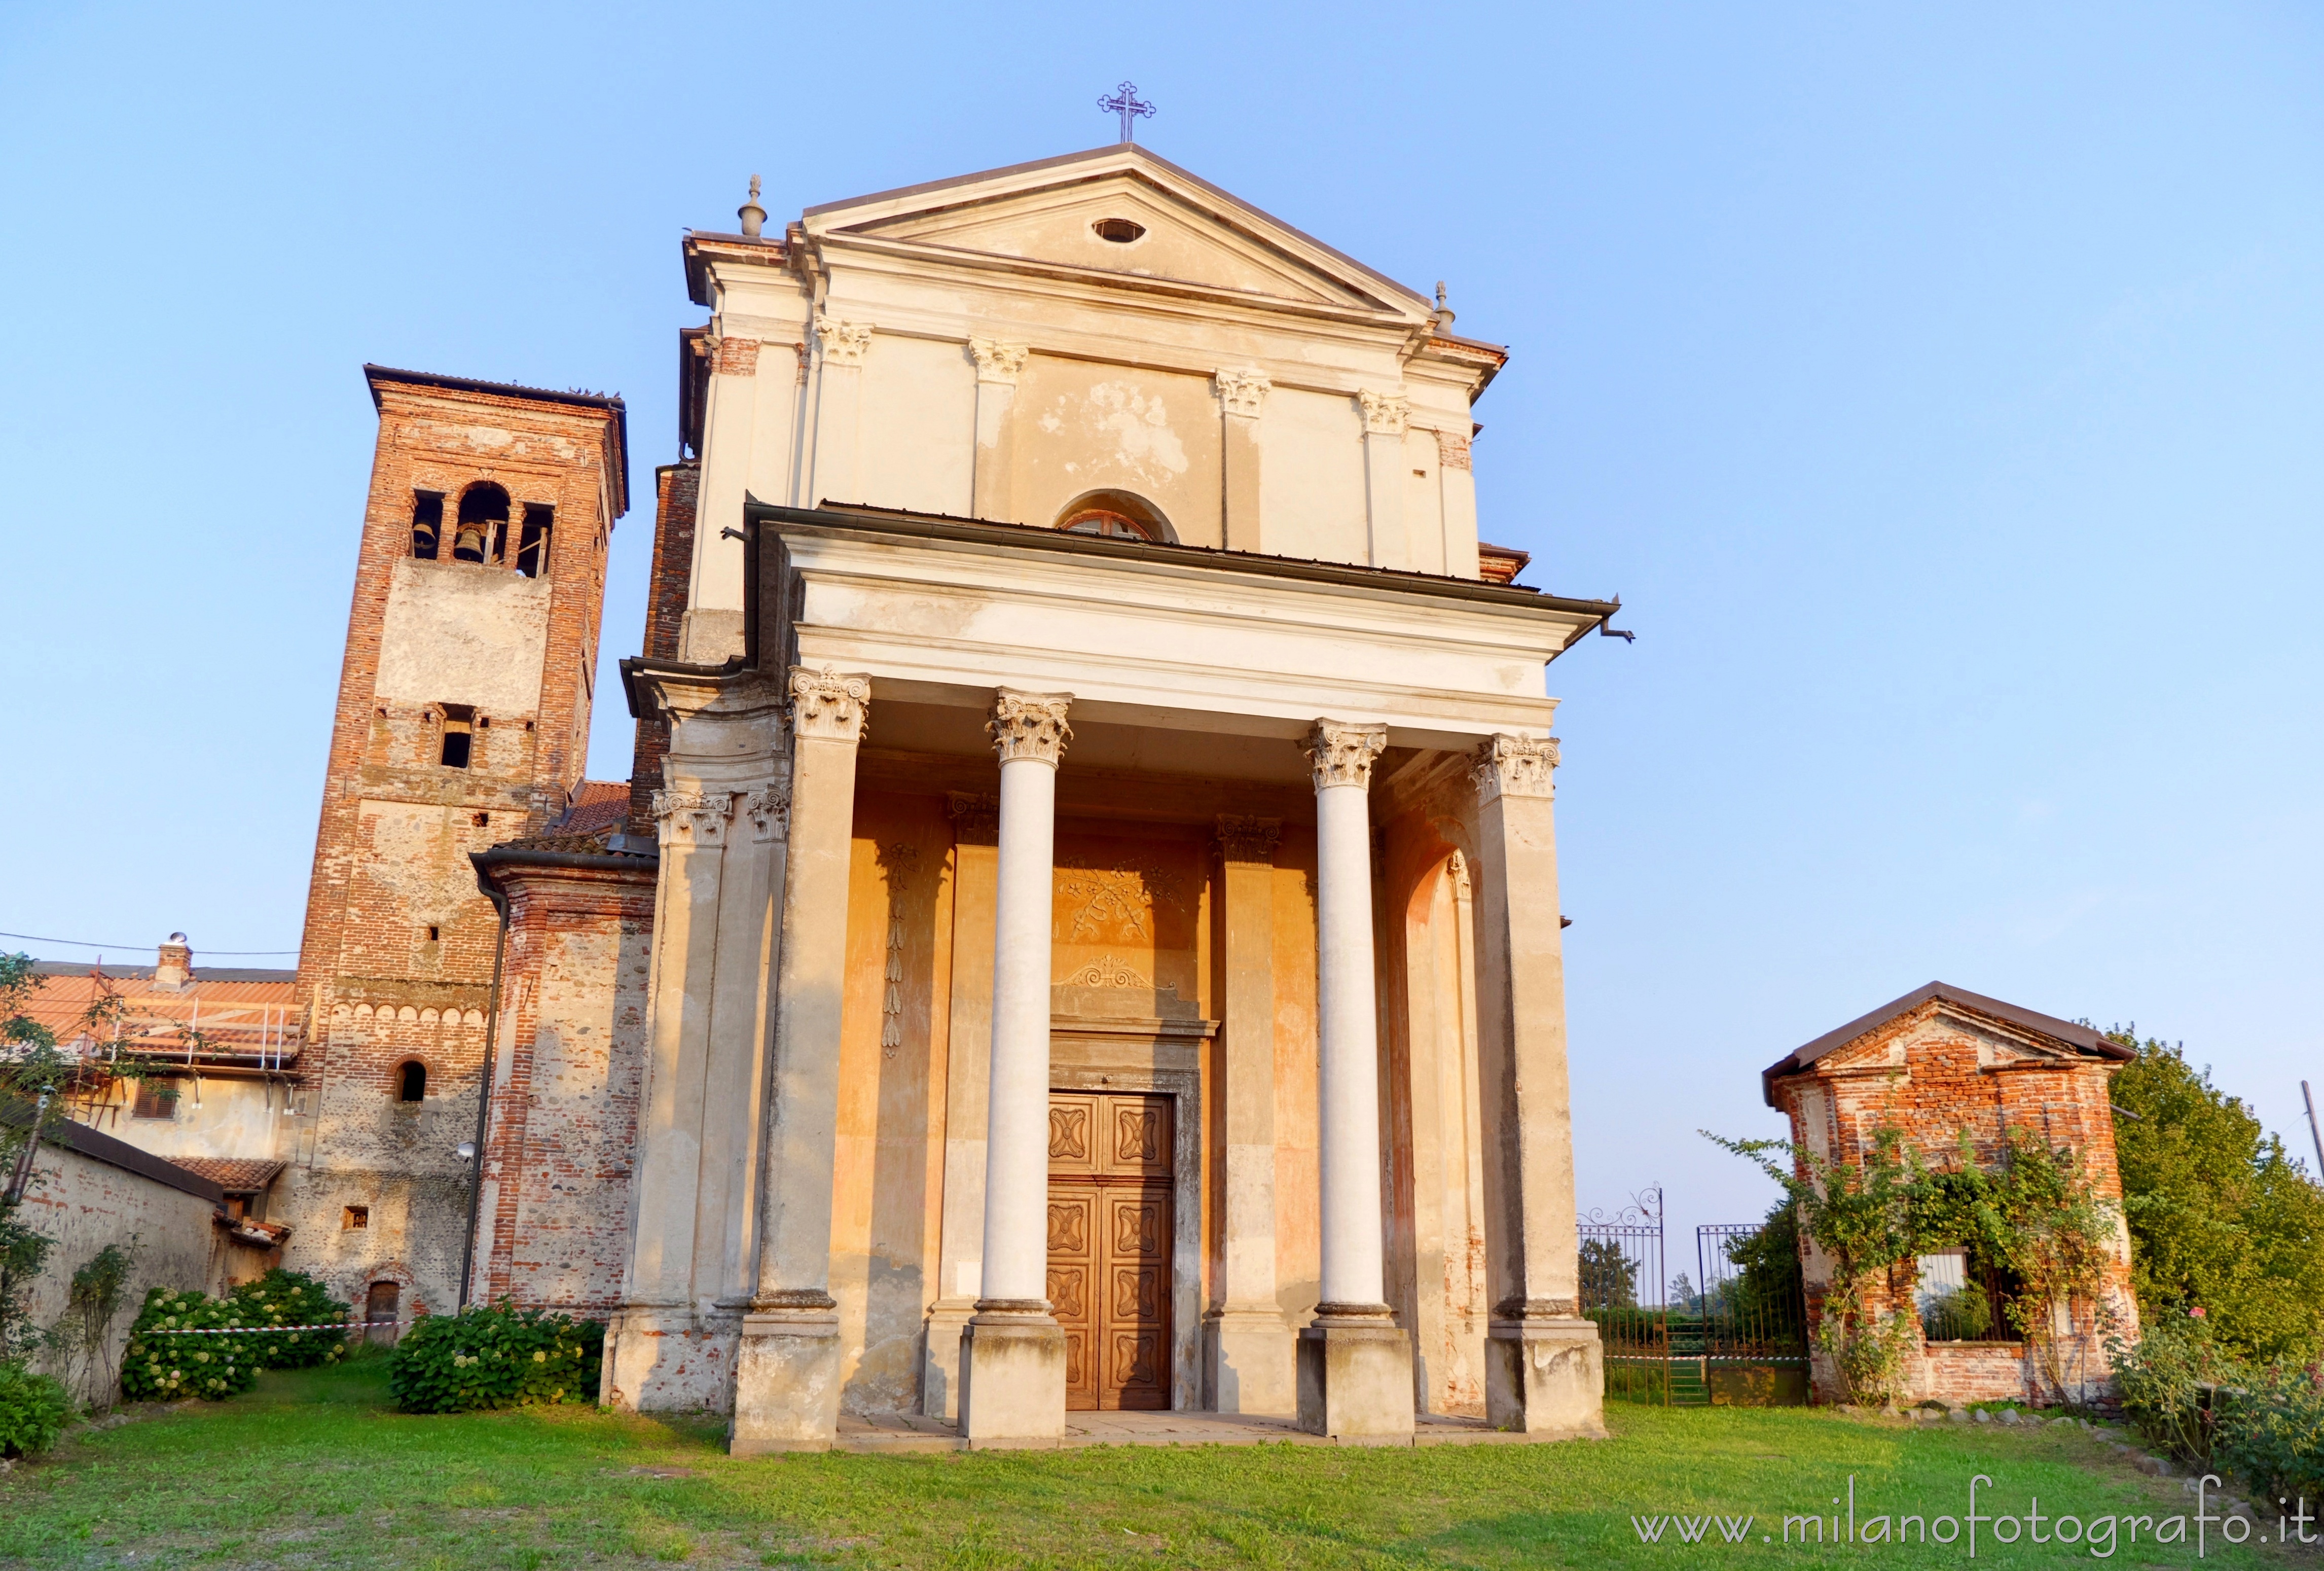 Mottalciata (Biella): Chiesa di San Vincenzo - Mottalciata (Biella)